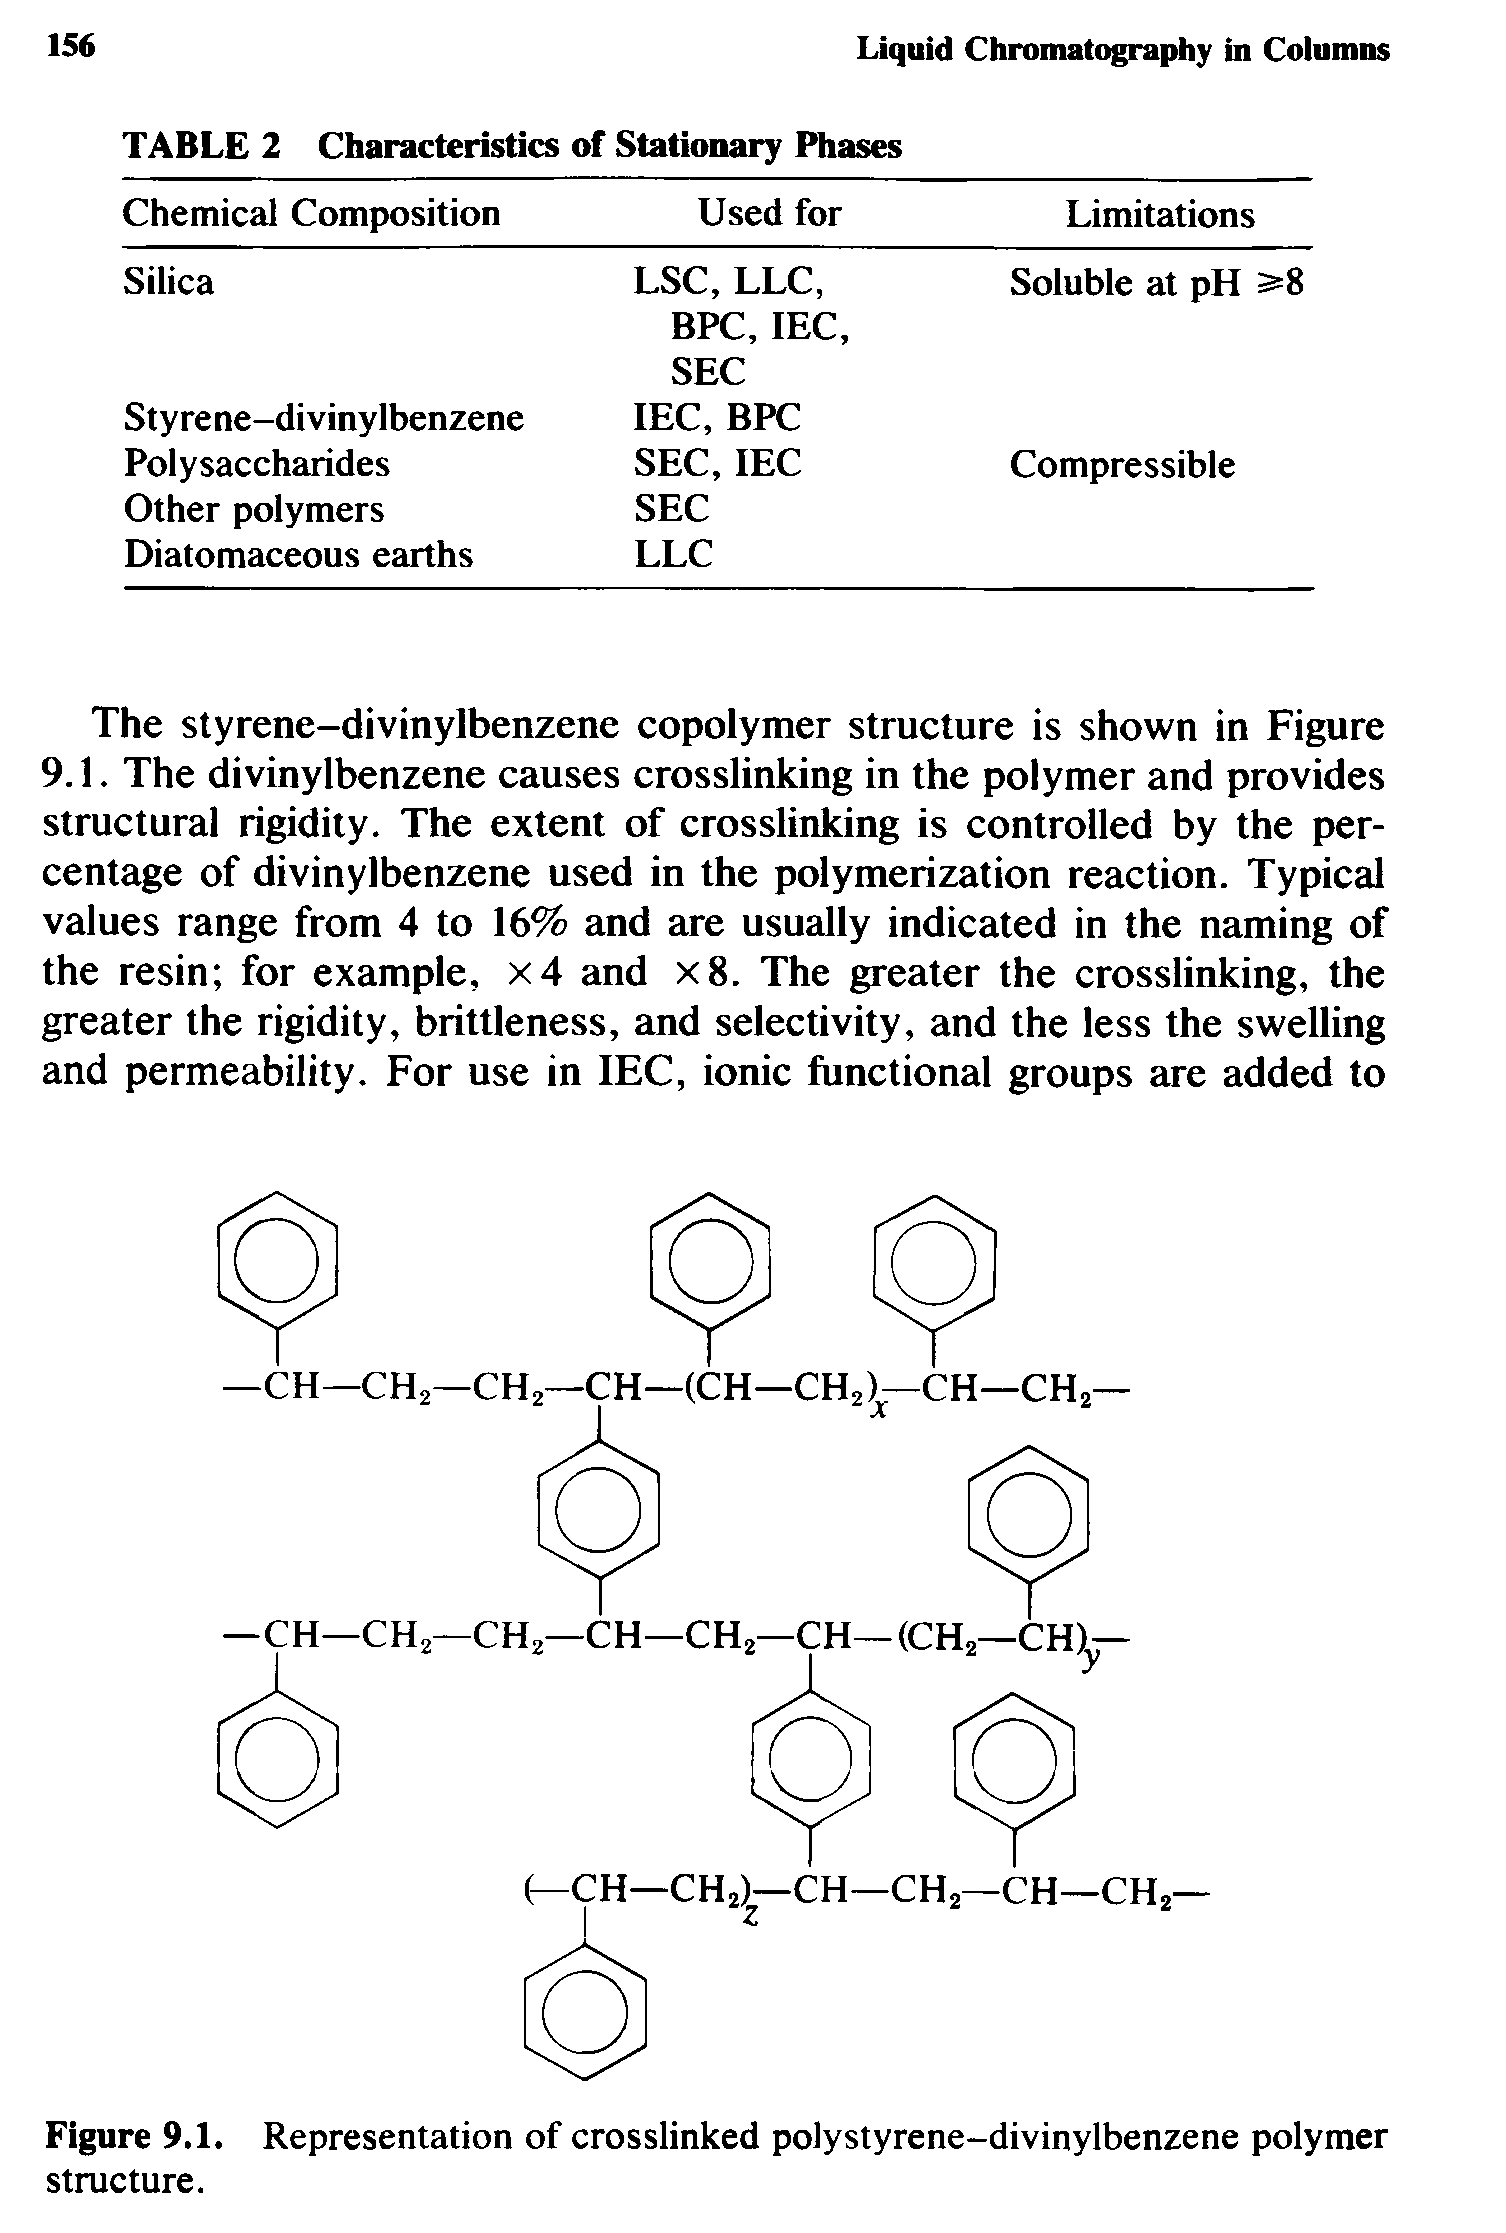 Figure 9.1. Representation of crosslinked polystyrene-divinylbenzene polymer structure.